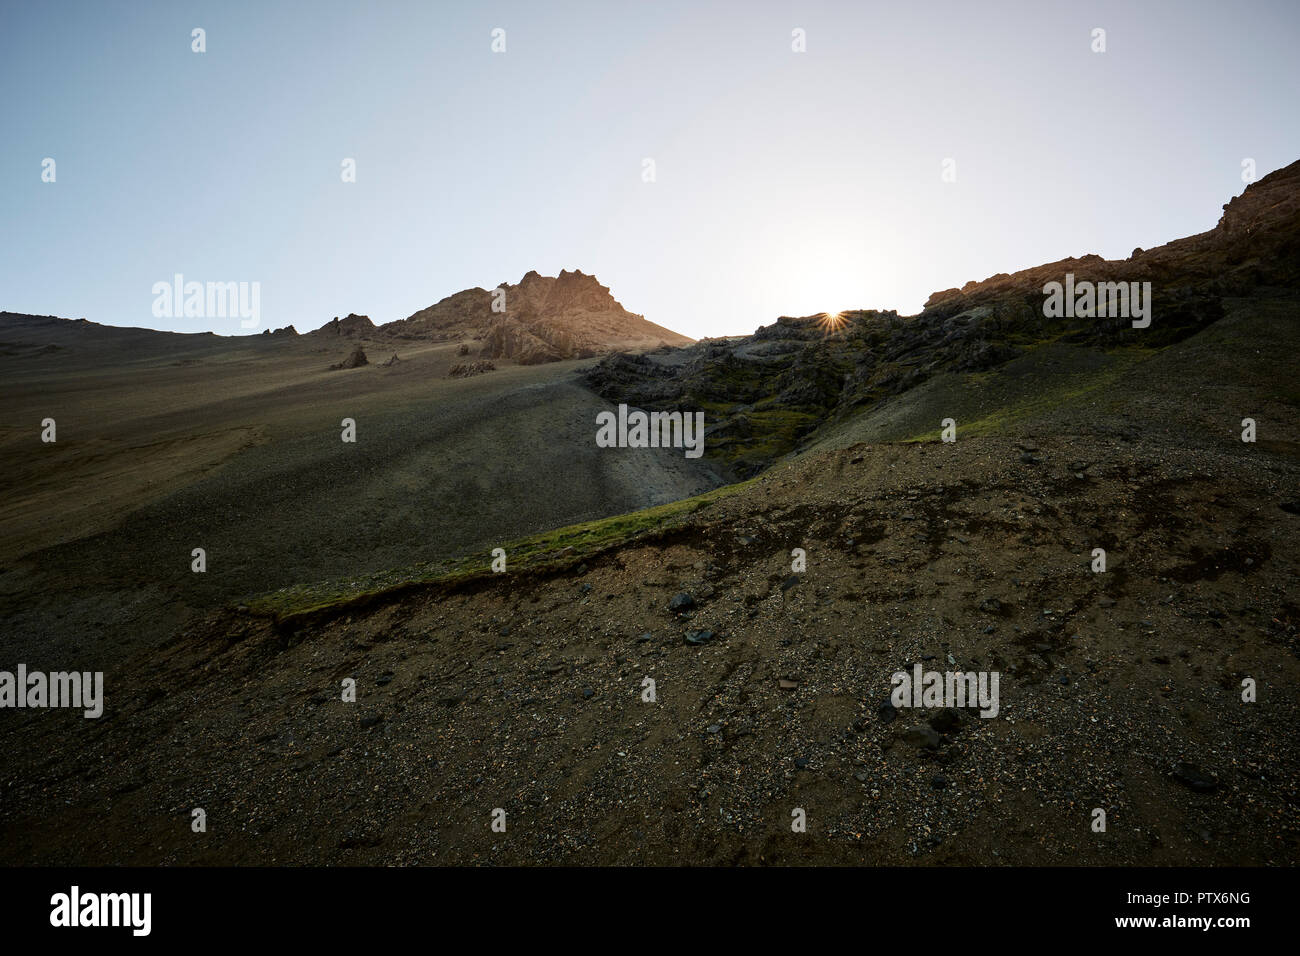 The rocky desert like volcanic landscape of south east Iceland Stock Photo